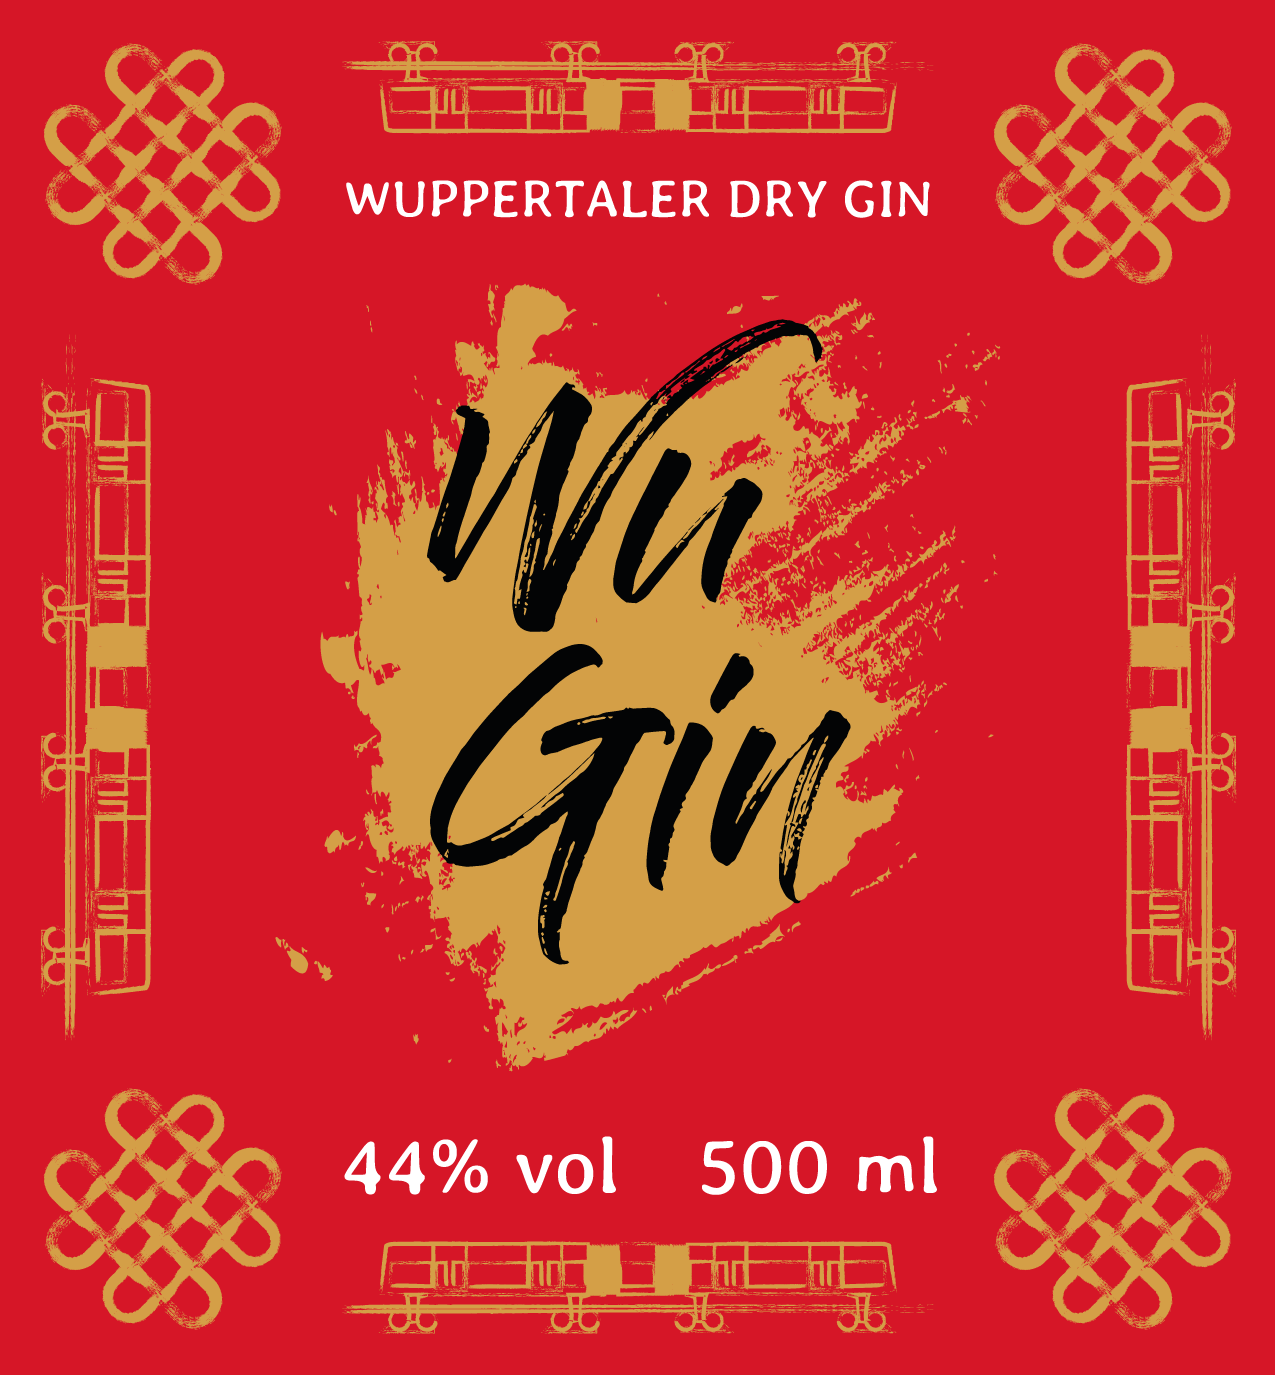 WuGin  Wuppertaler Dry Gin